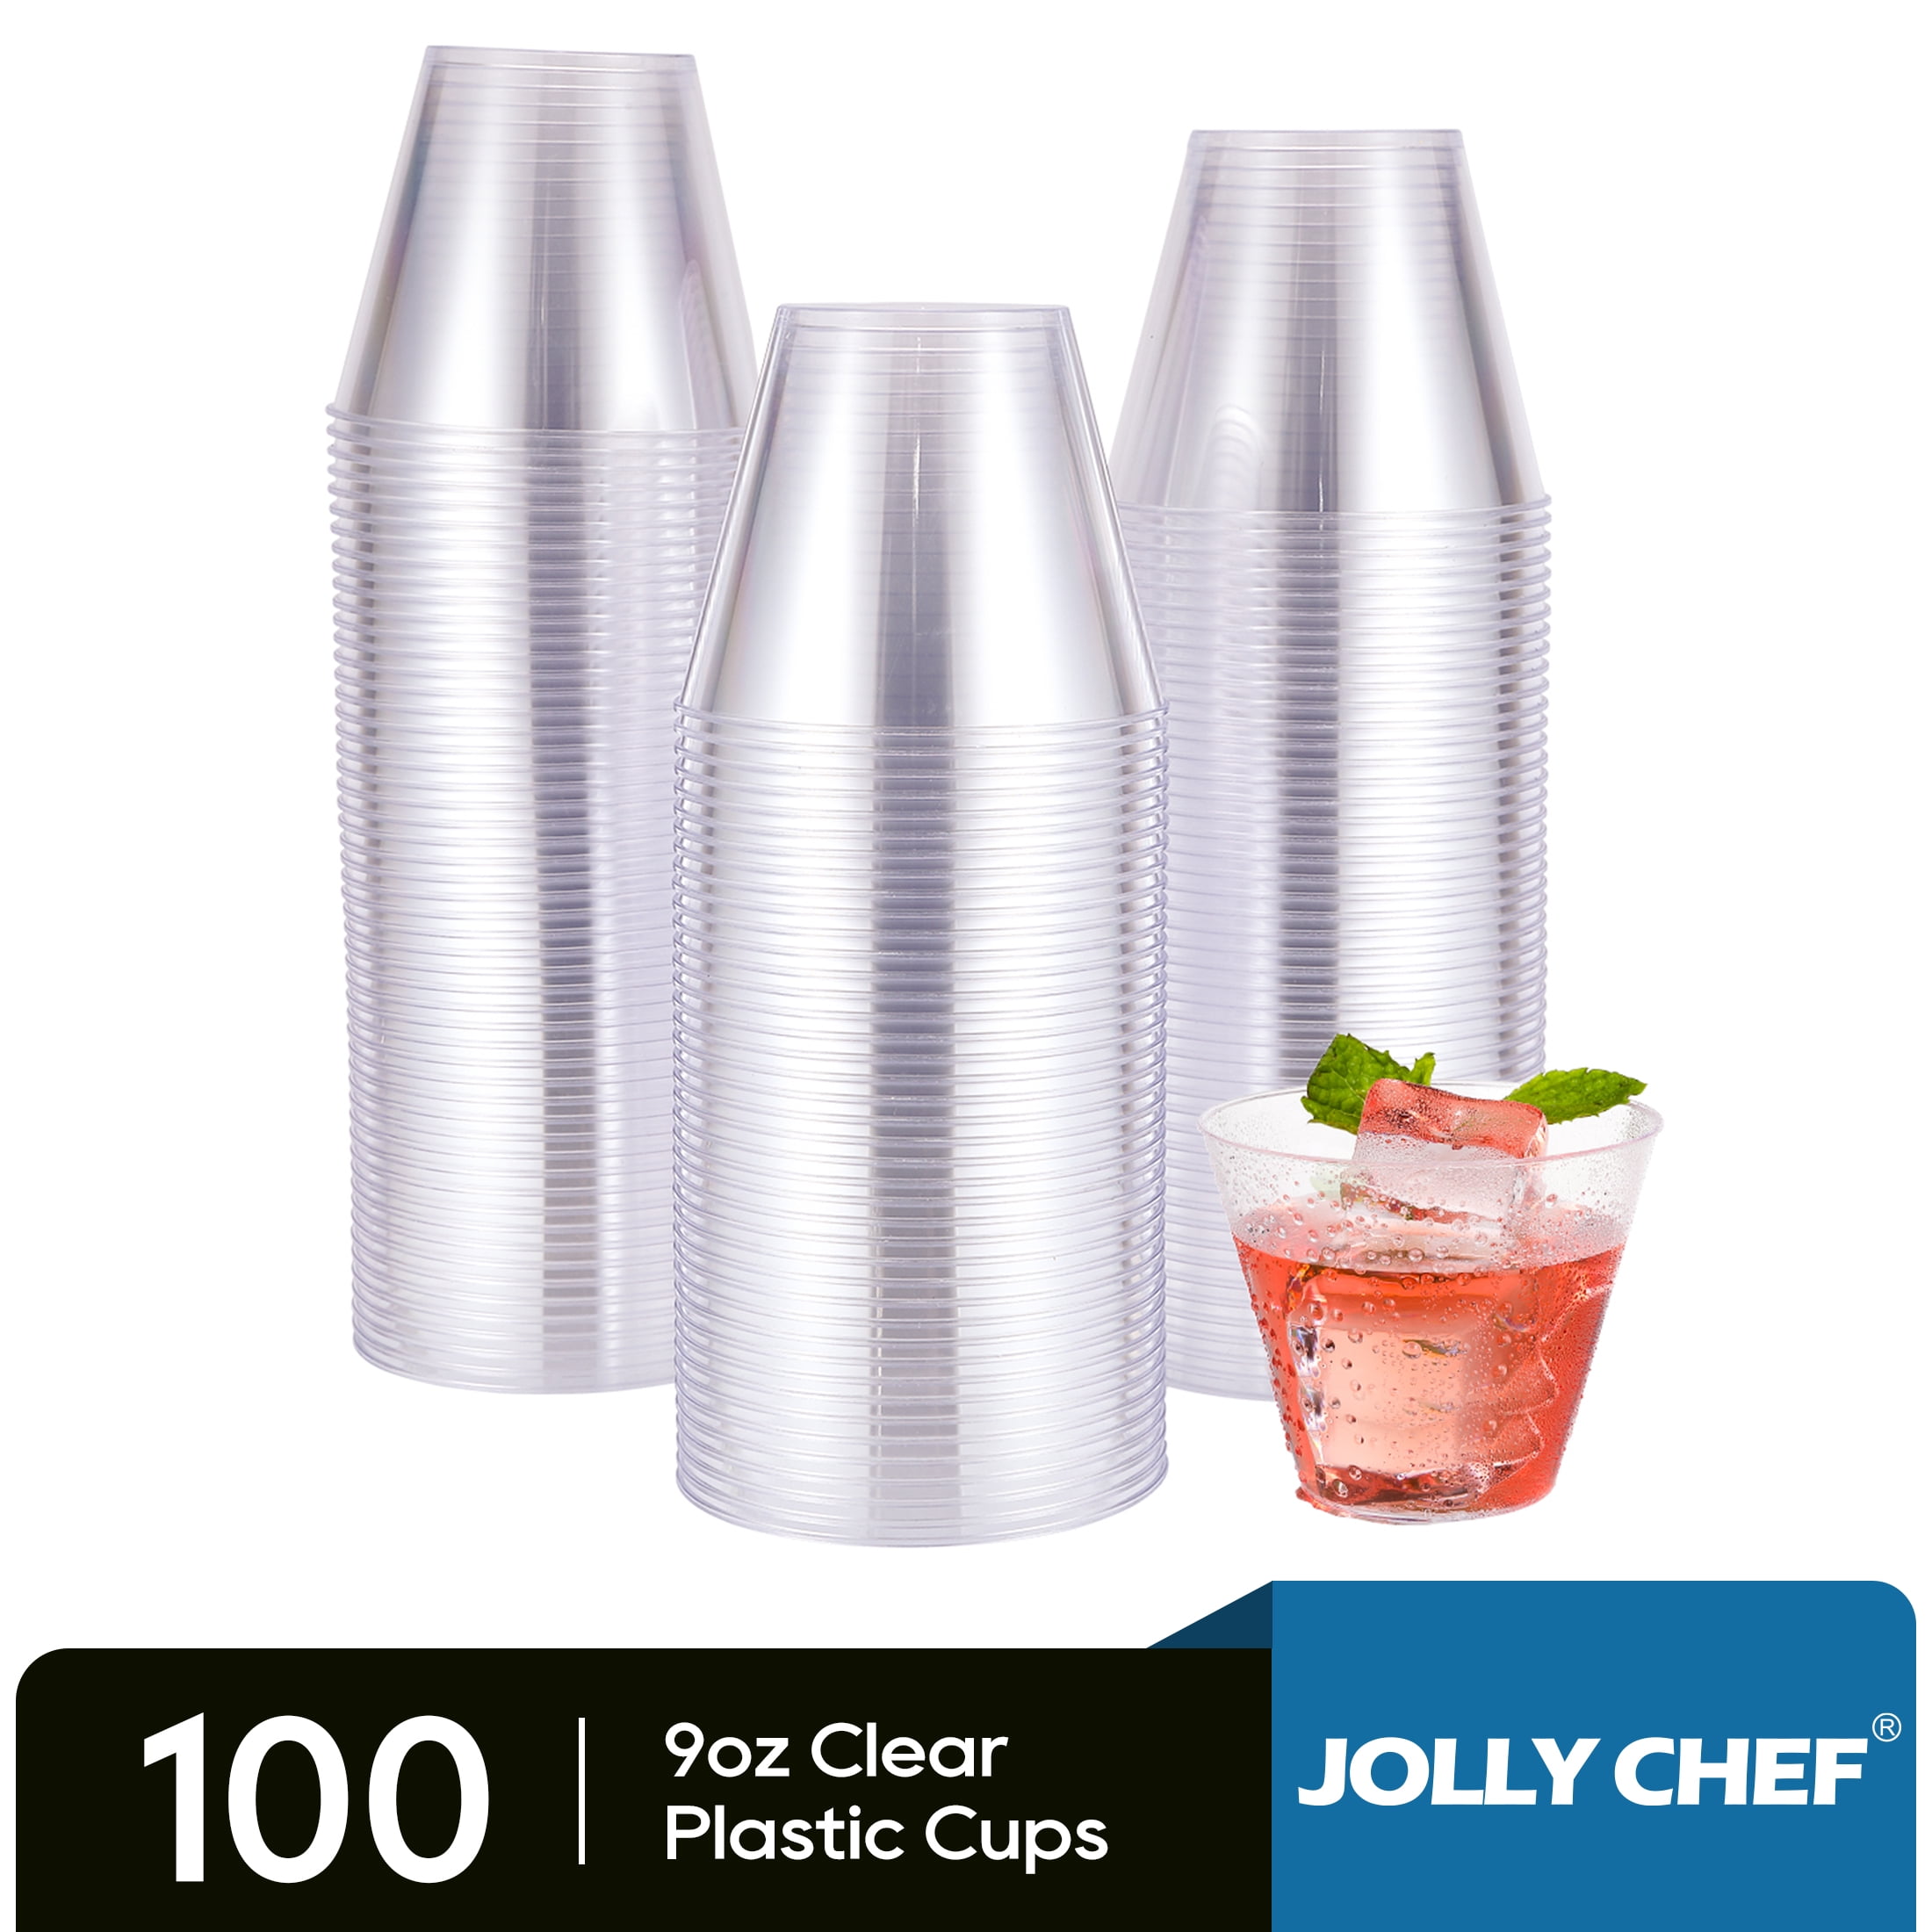 Solo Squared Plastic Cups • 18 oz 20 Count